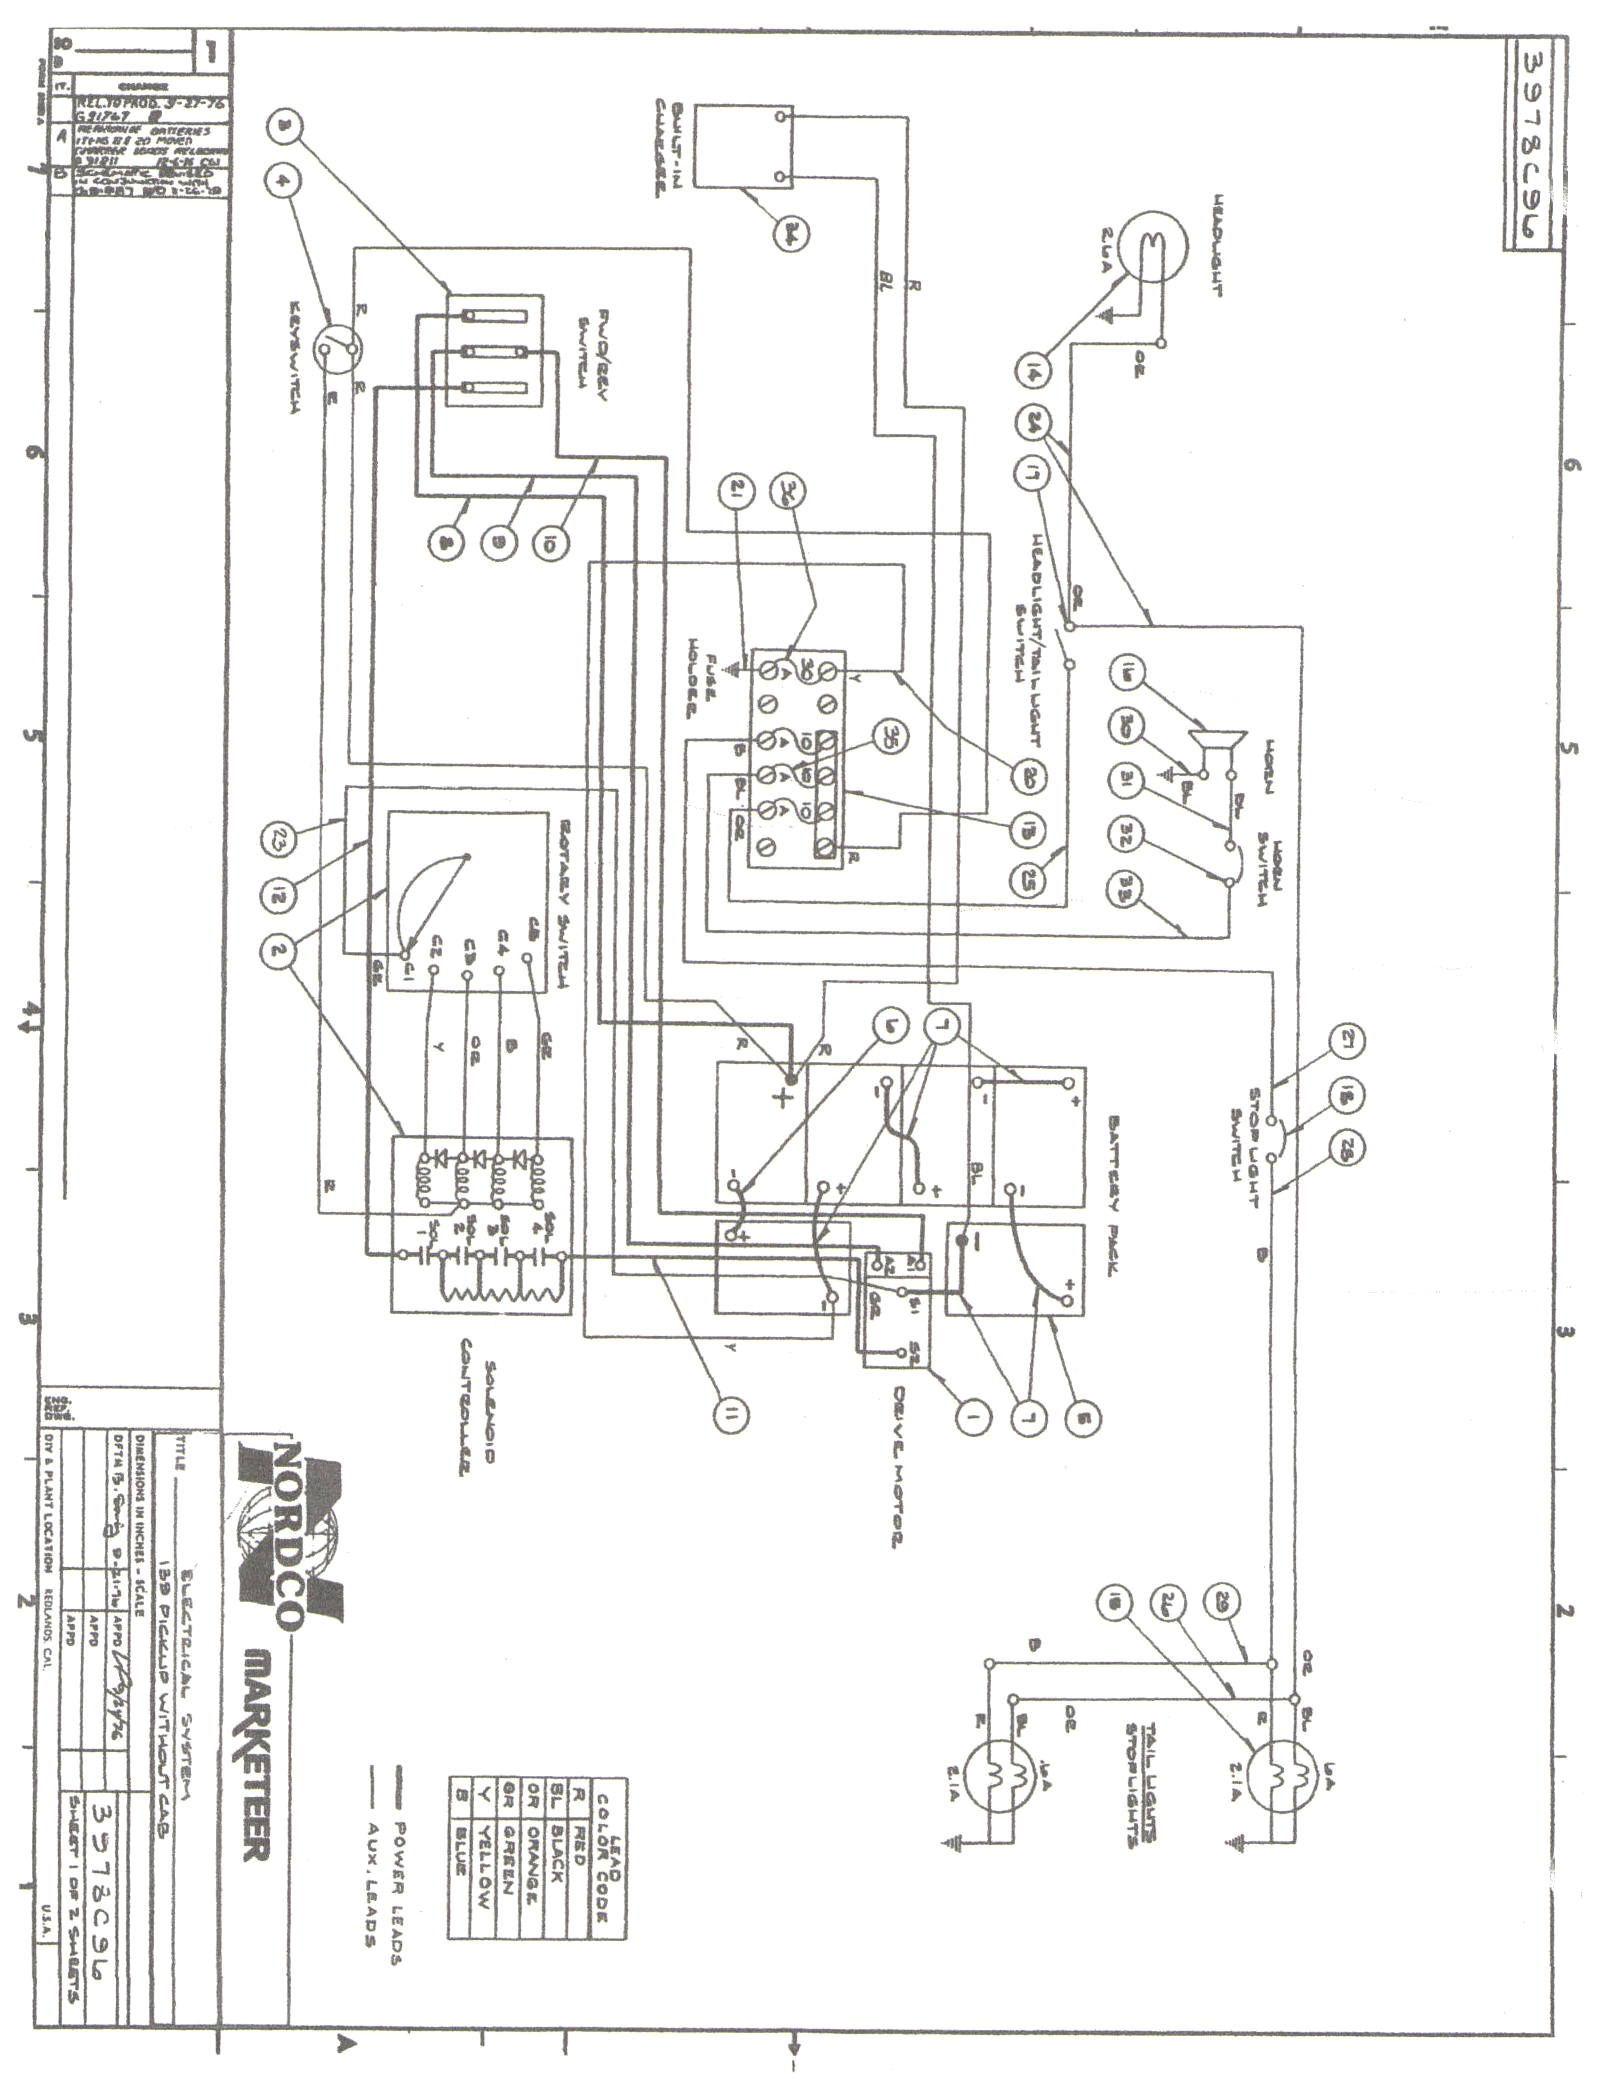 1996 ez go wiring diagram